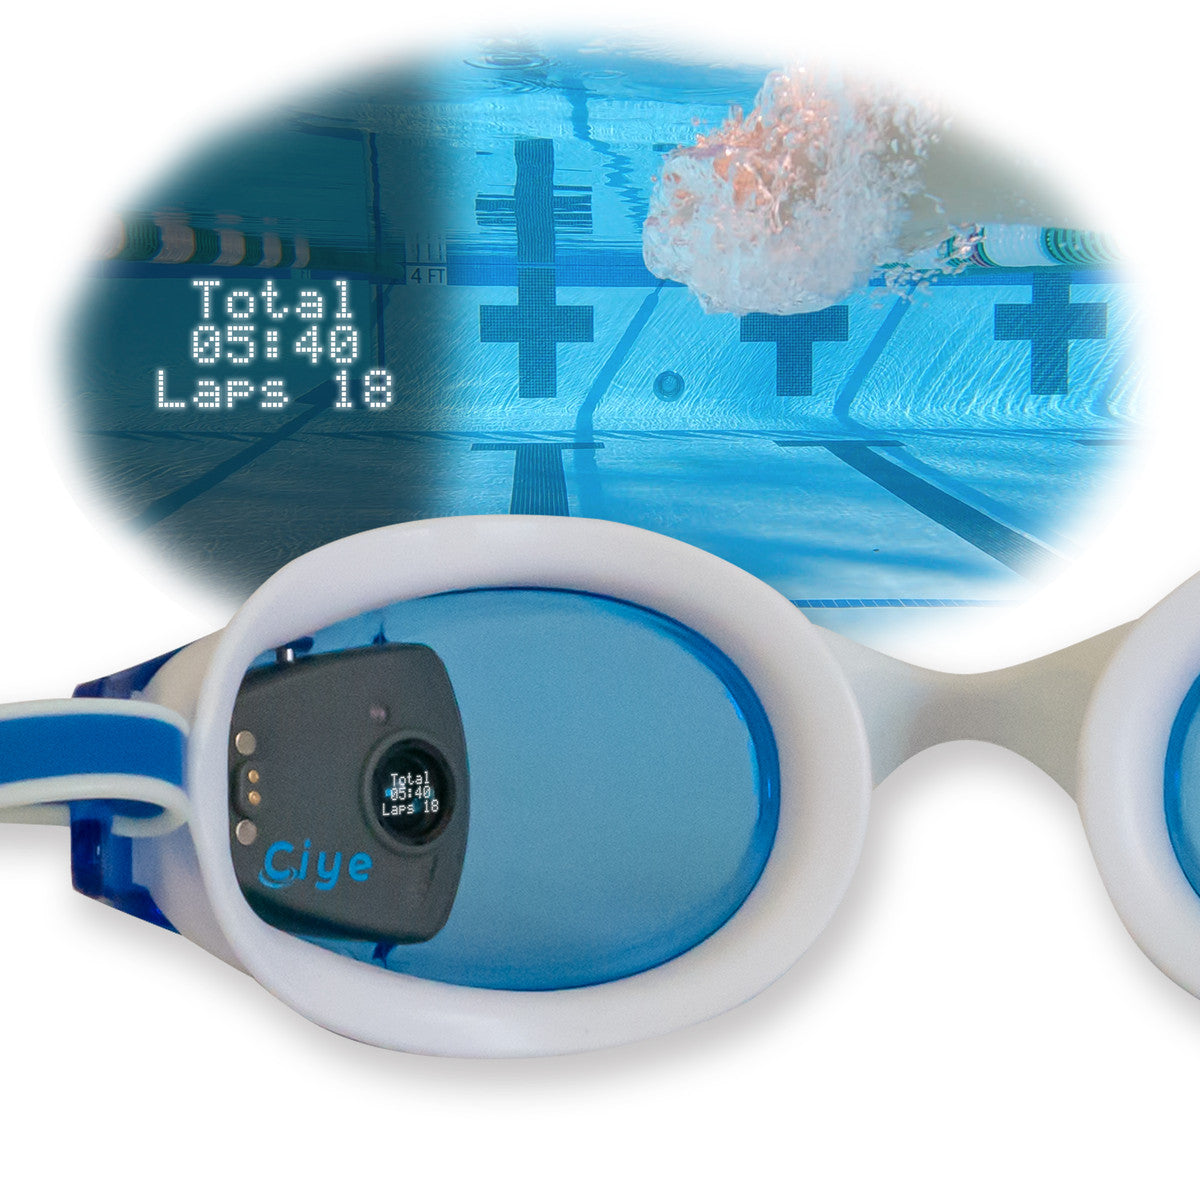 Smart Goggles Kit